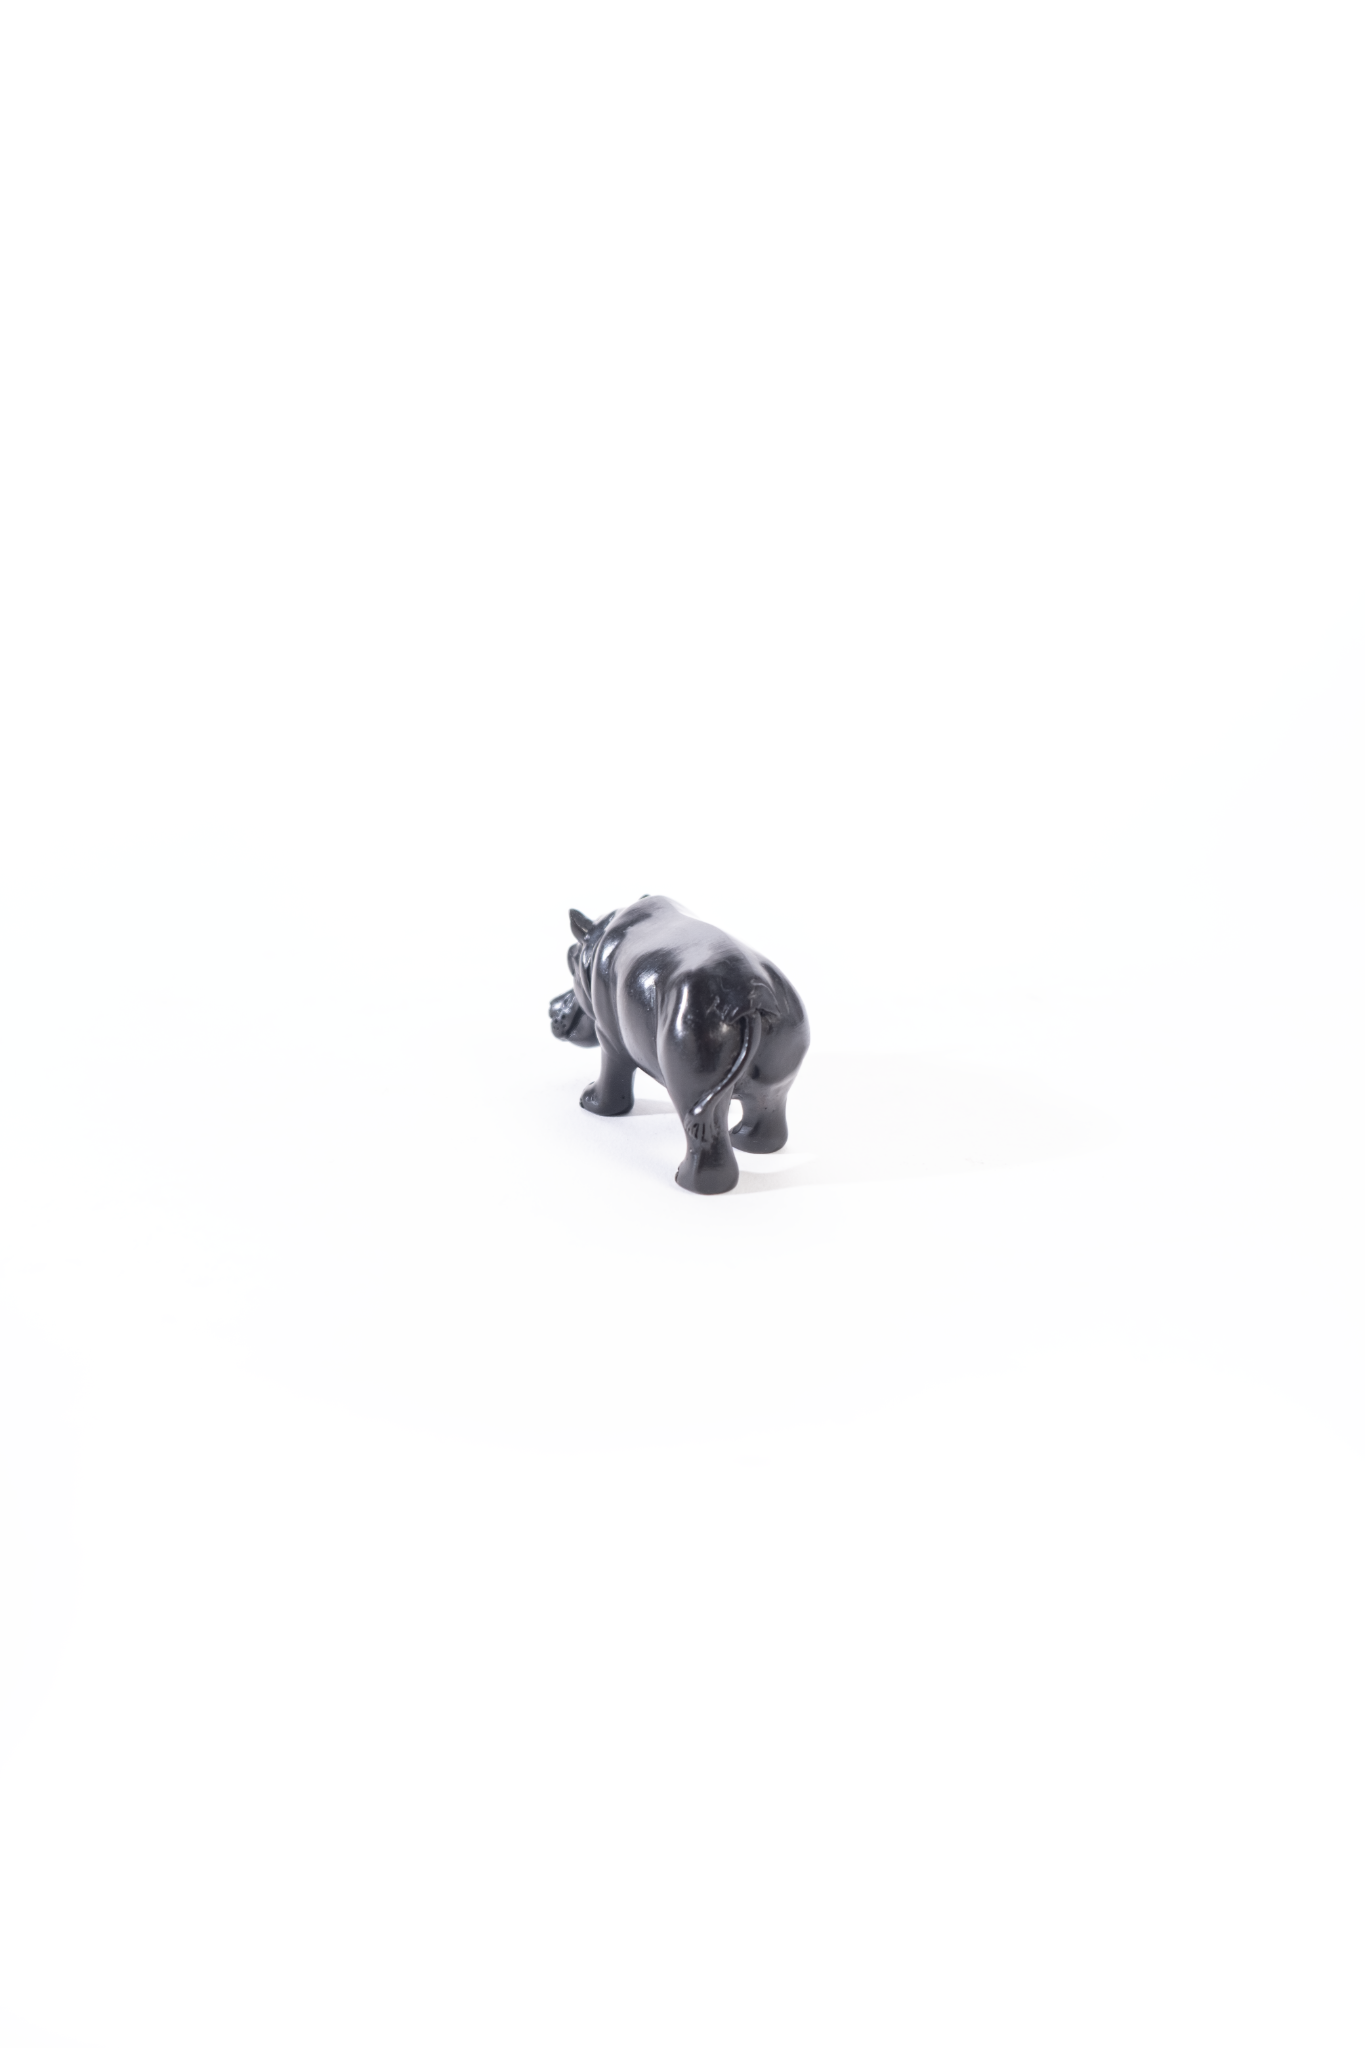 Small resin Hippo